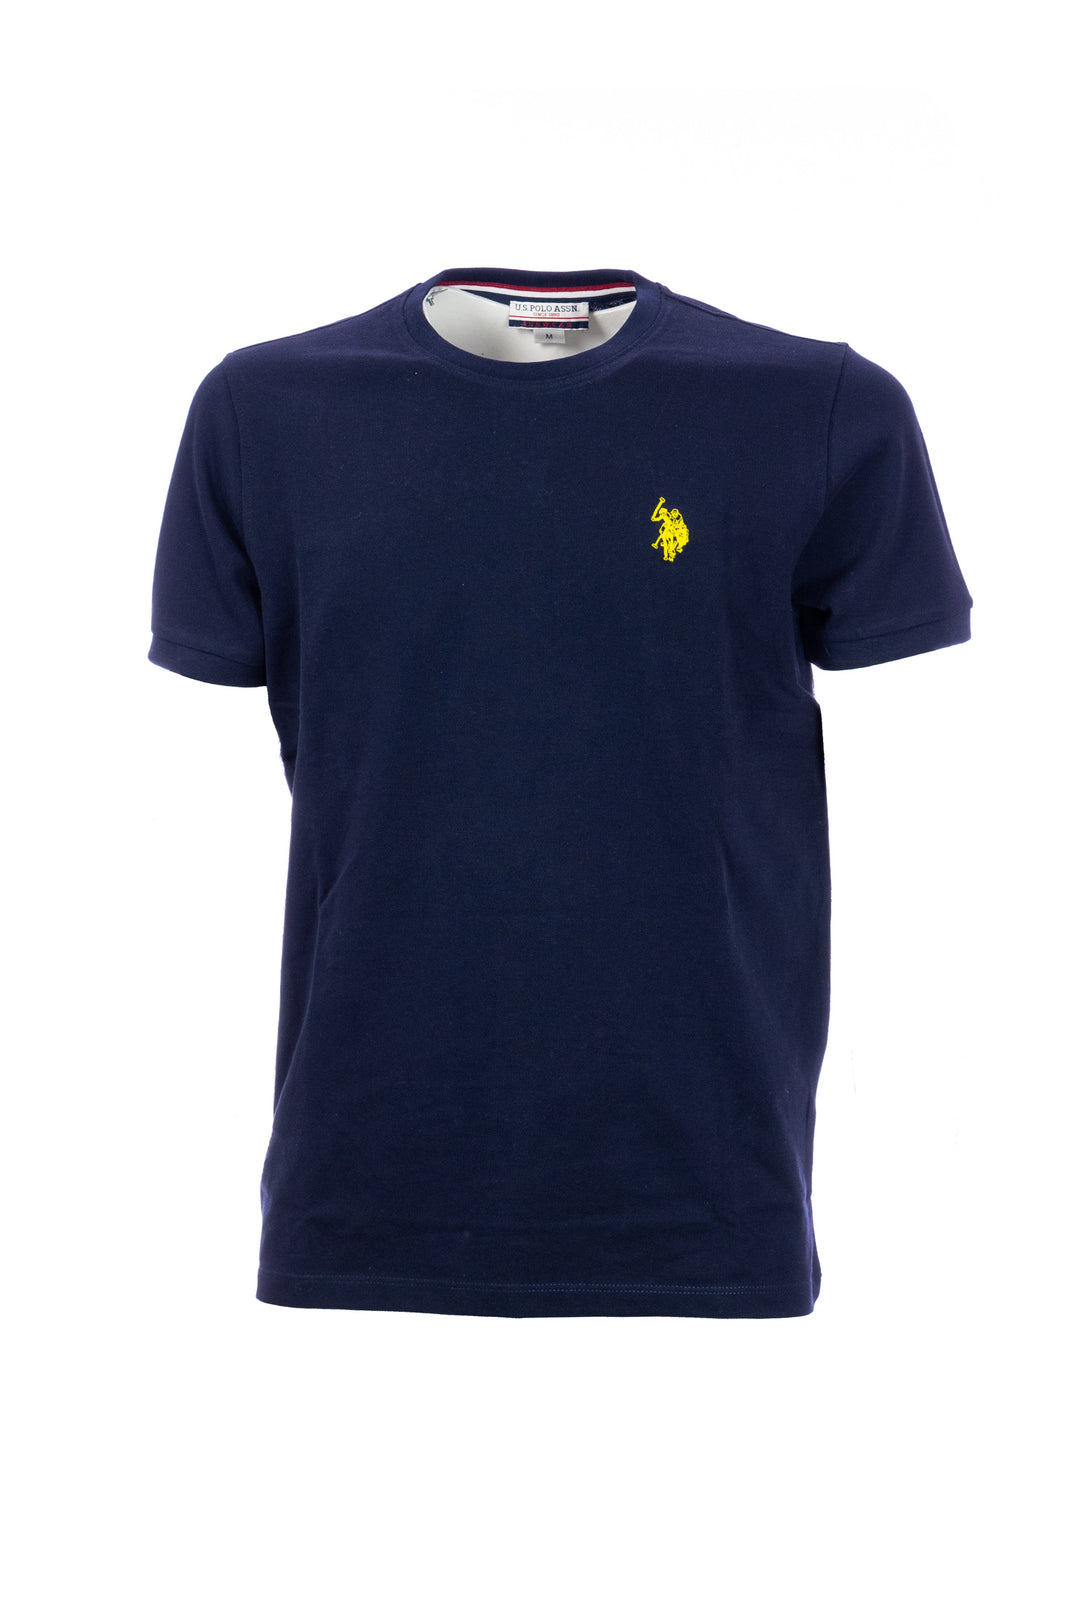 U.S. POLO ASSN. BEACHWEAR T-shirt blu navy in cotone con logo ricamato - Mancinelli 1954